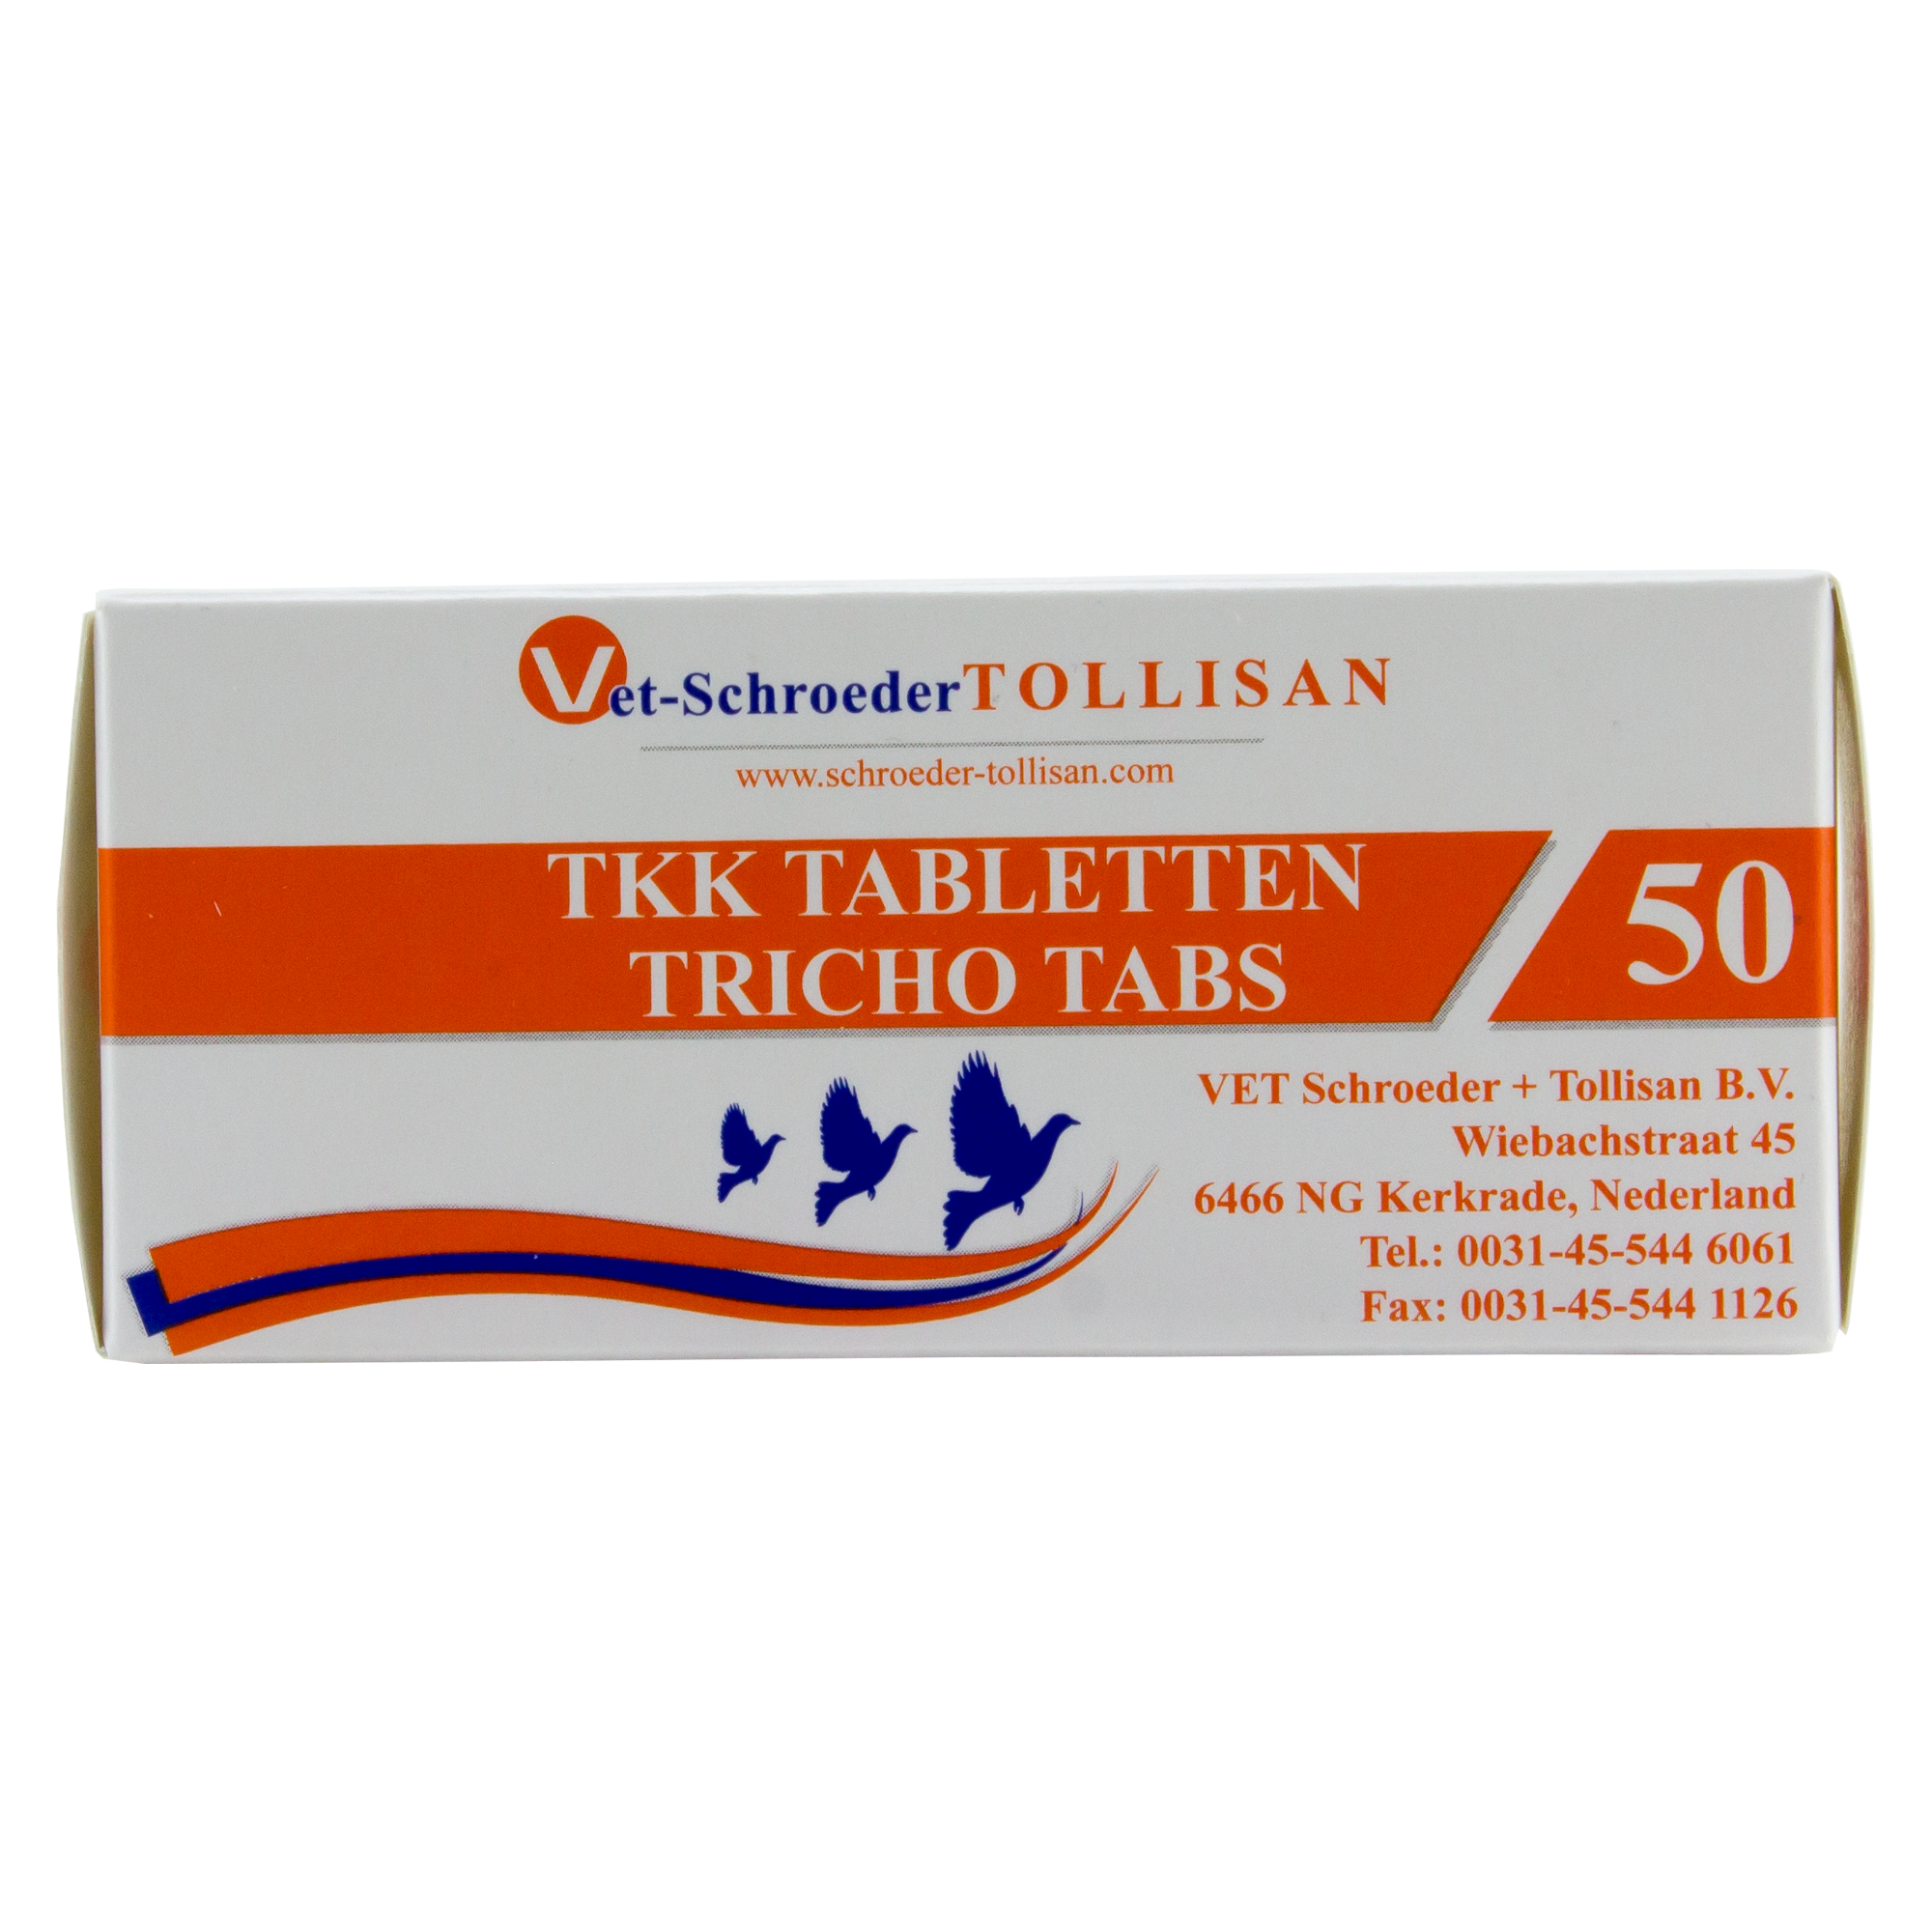 VST TKK tablets / Tricho tabs